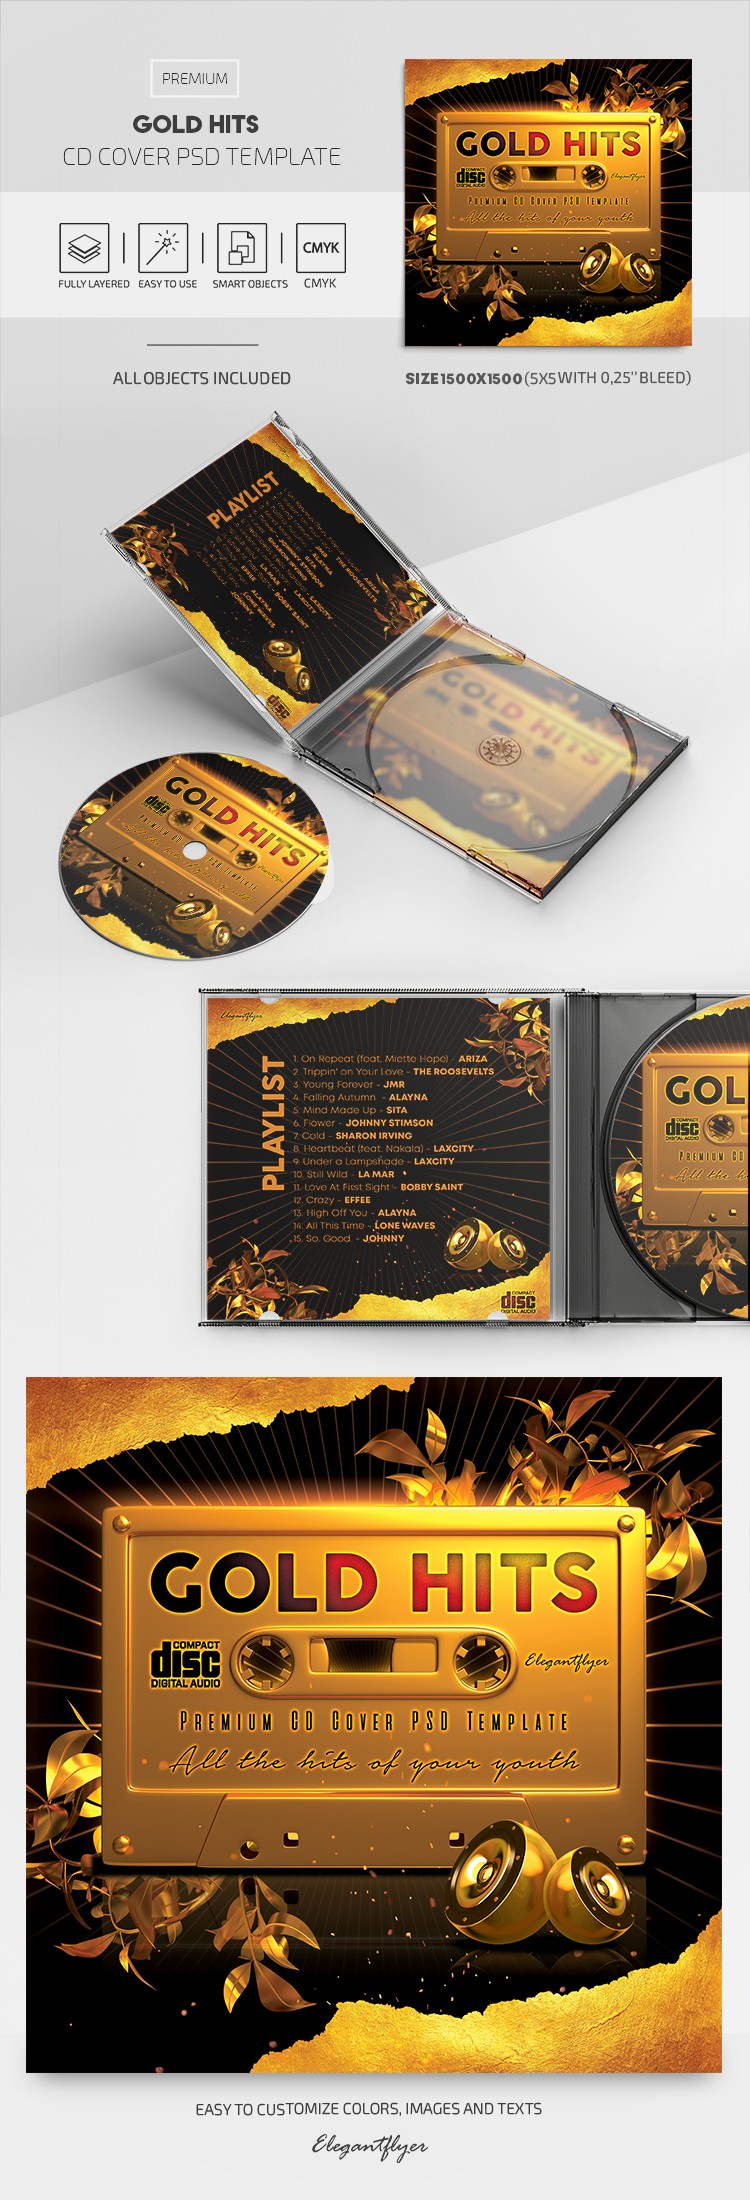 Gold Hits CD Cover by ElegantFlyer